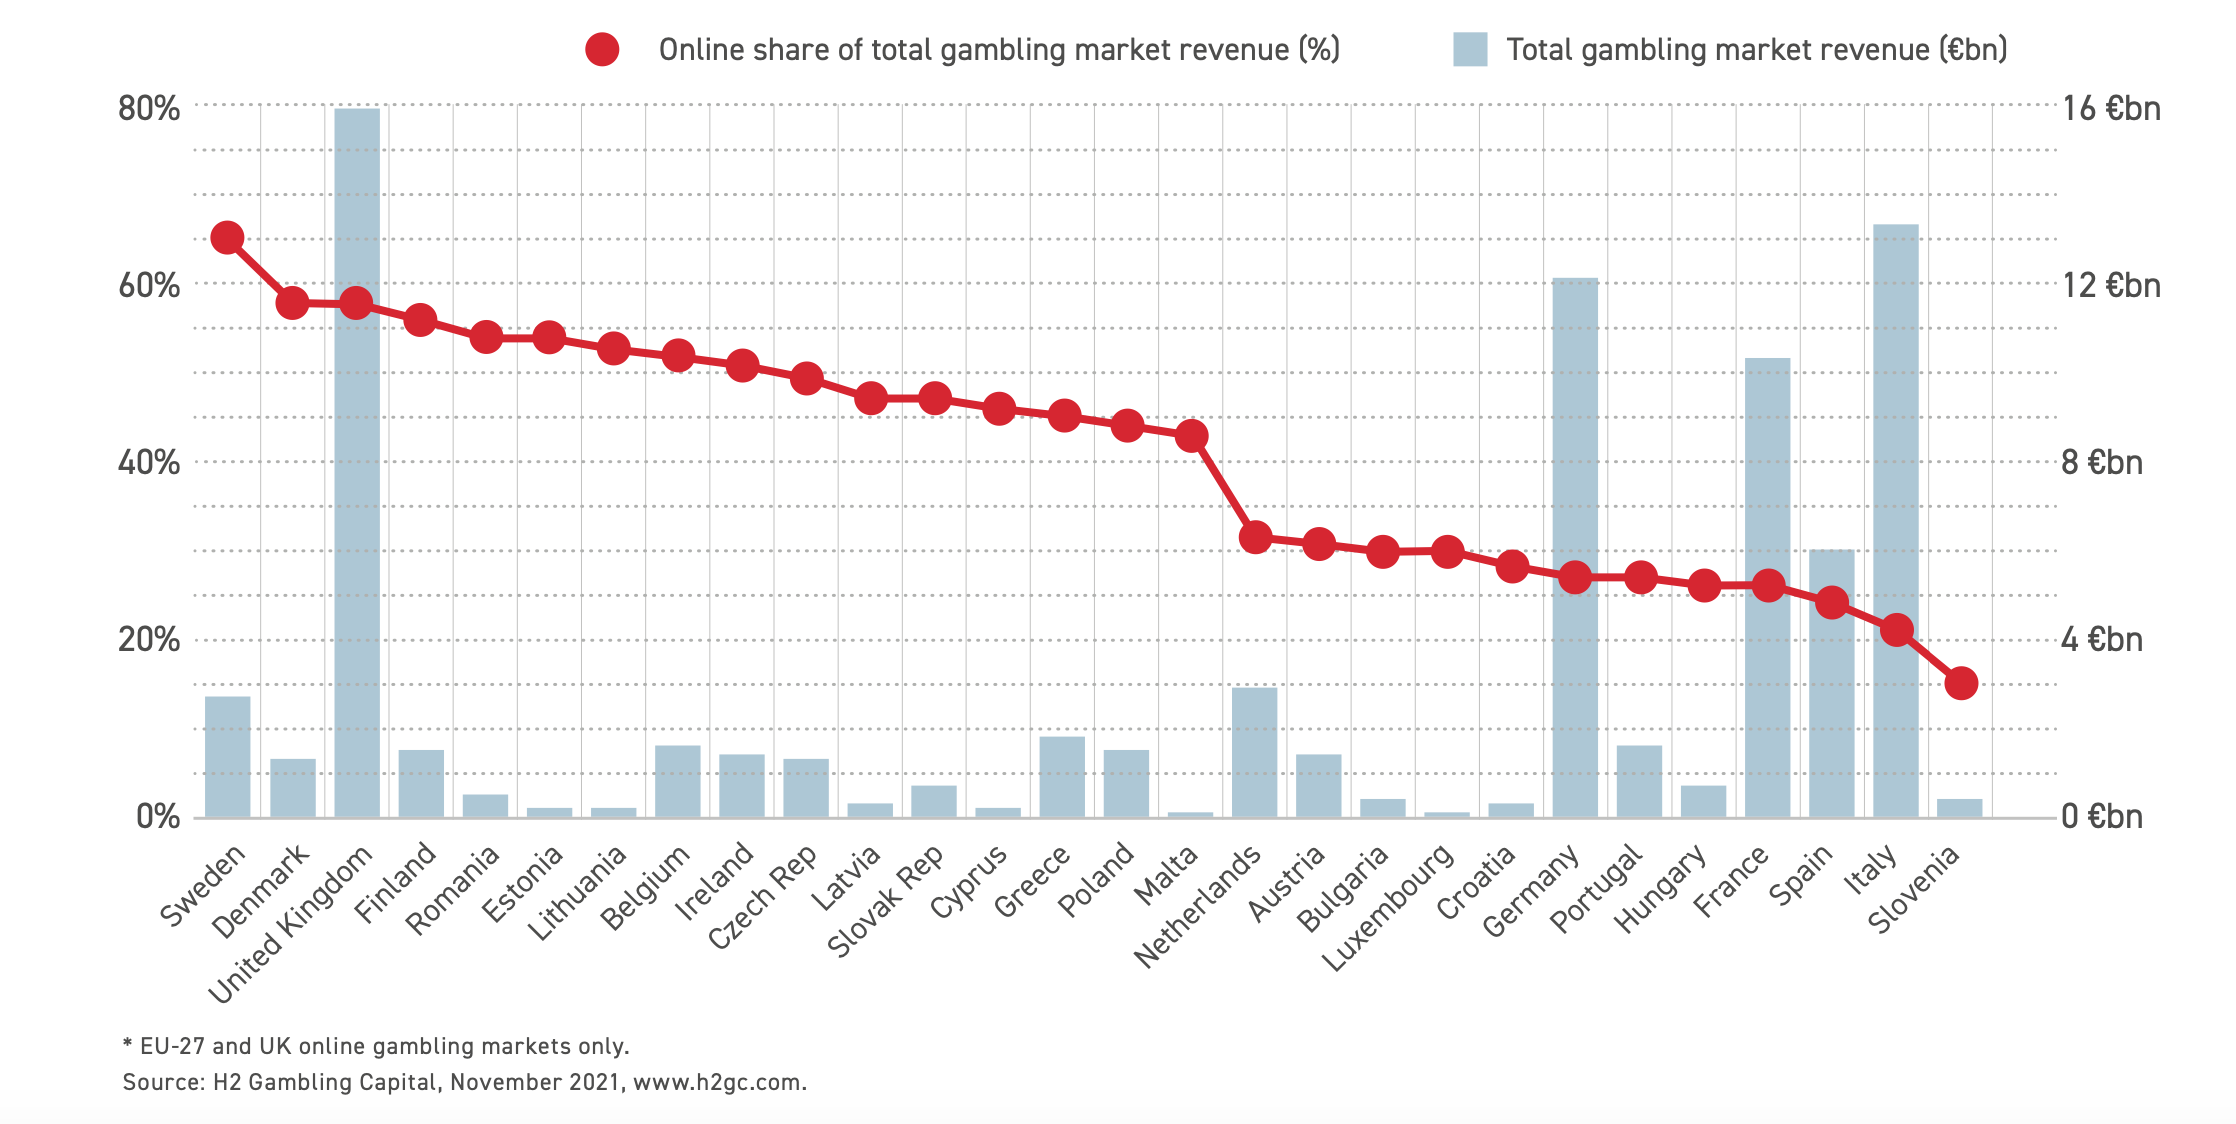 Online gambling shares of national gambling markets in Europe (2020)